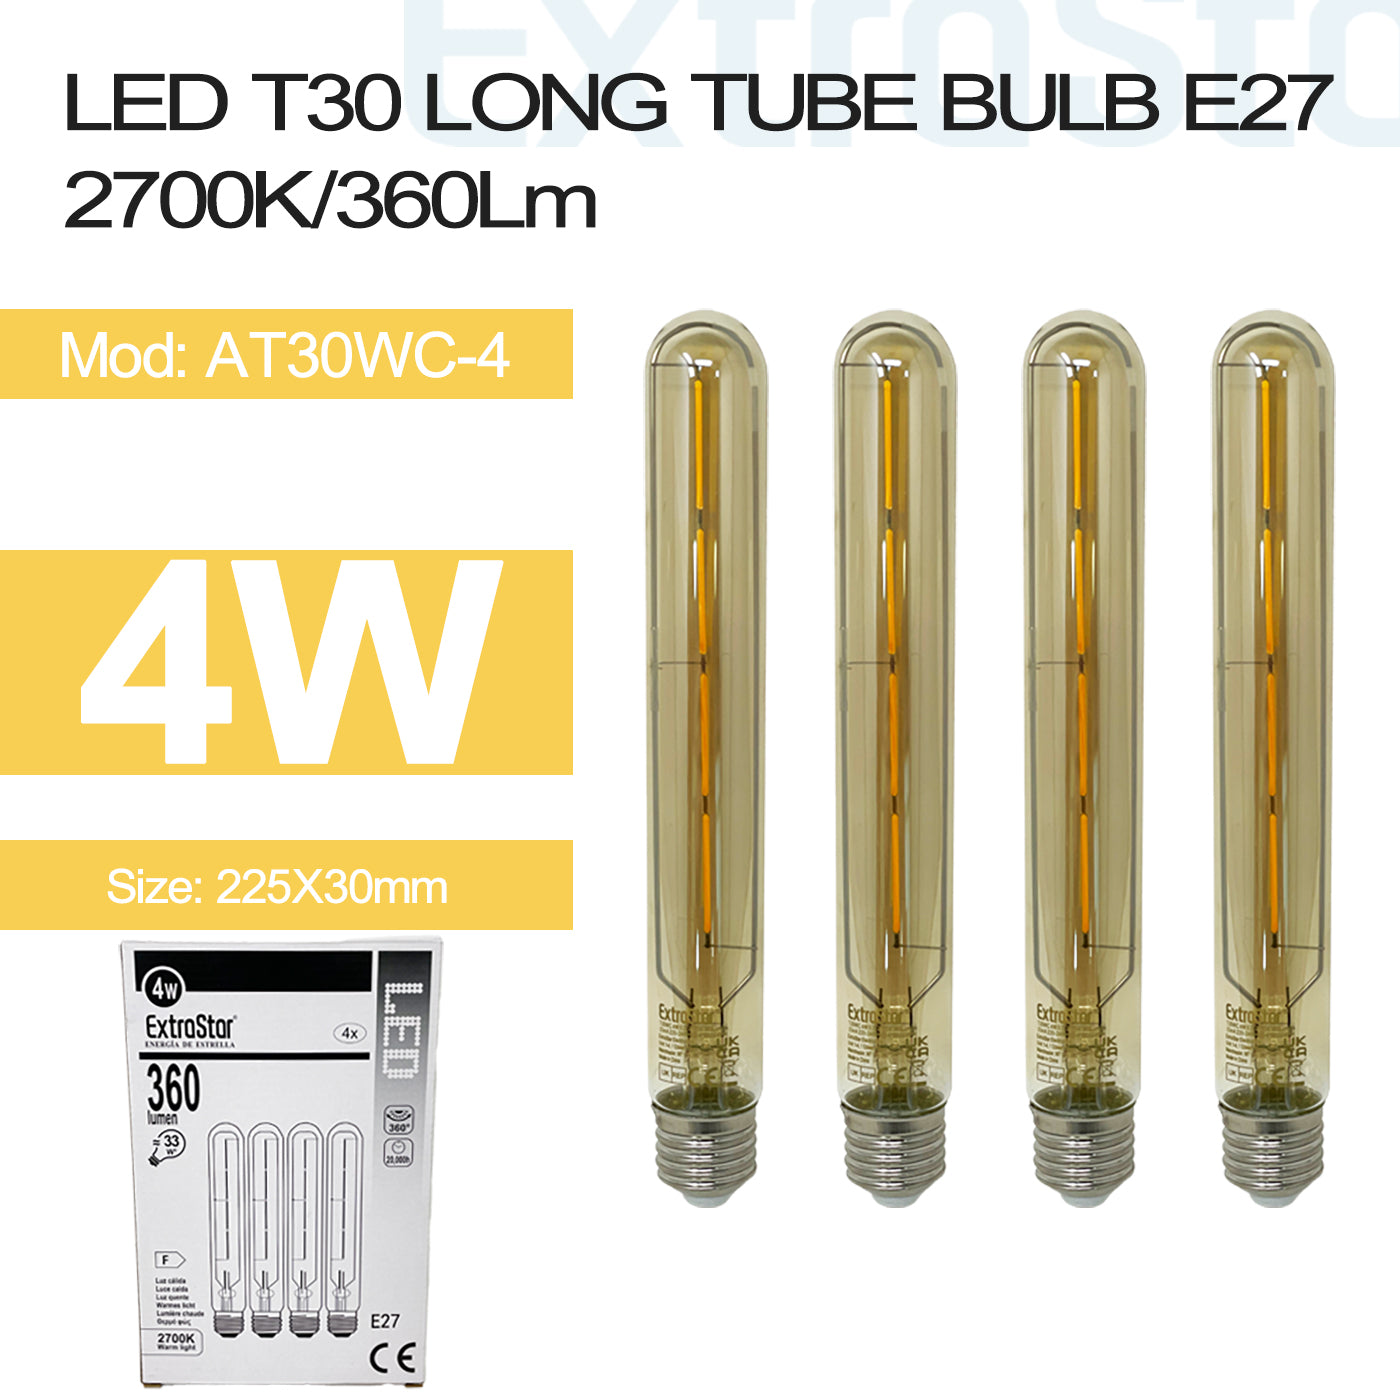 4W LED T30 Long Tube Bulb E27, 2700K, Pack of 4 (AT30WC-4)